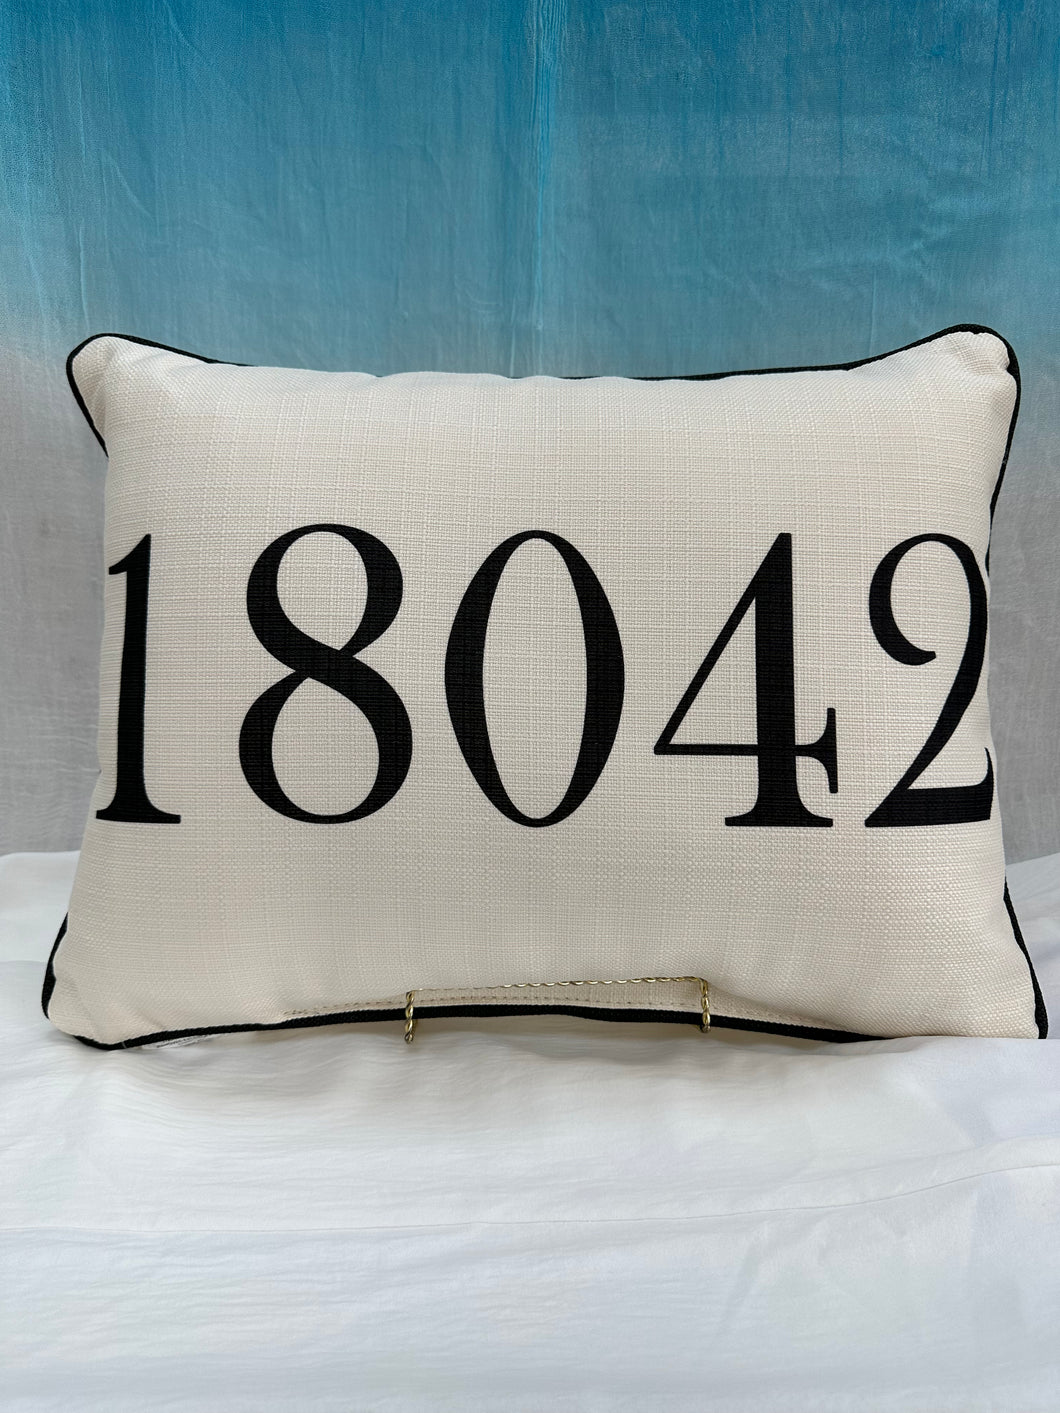 Easton, PA 18042 Zip Code Pillow